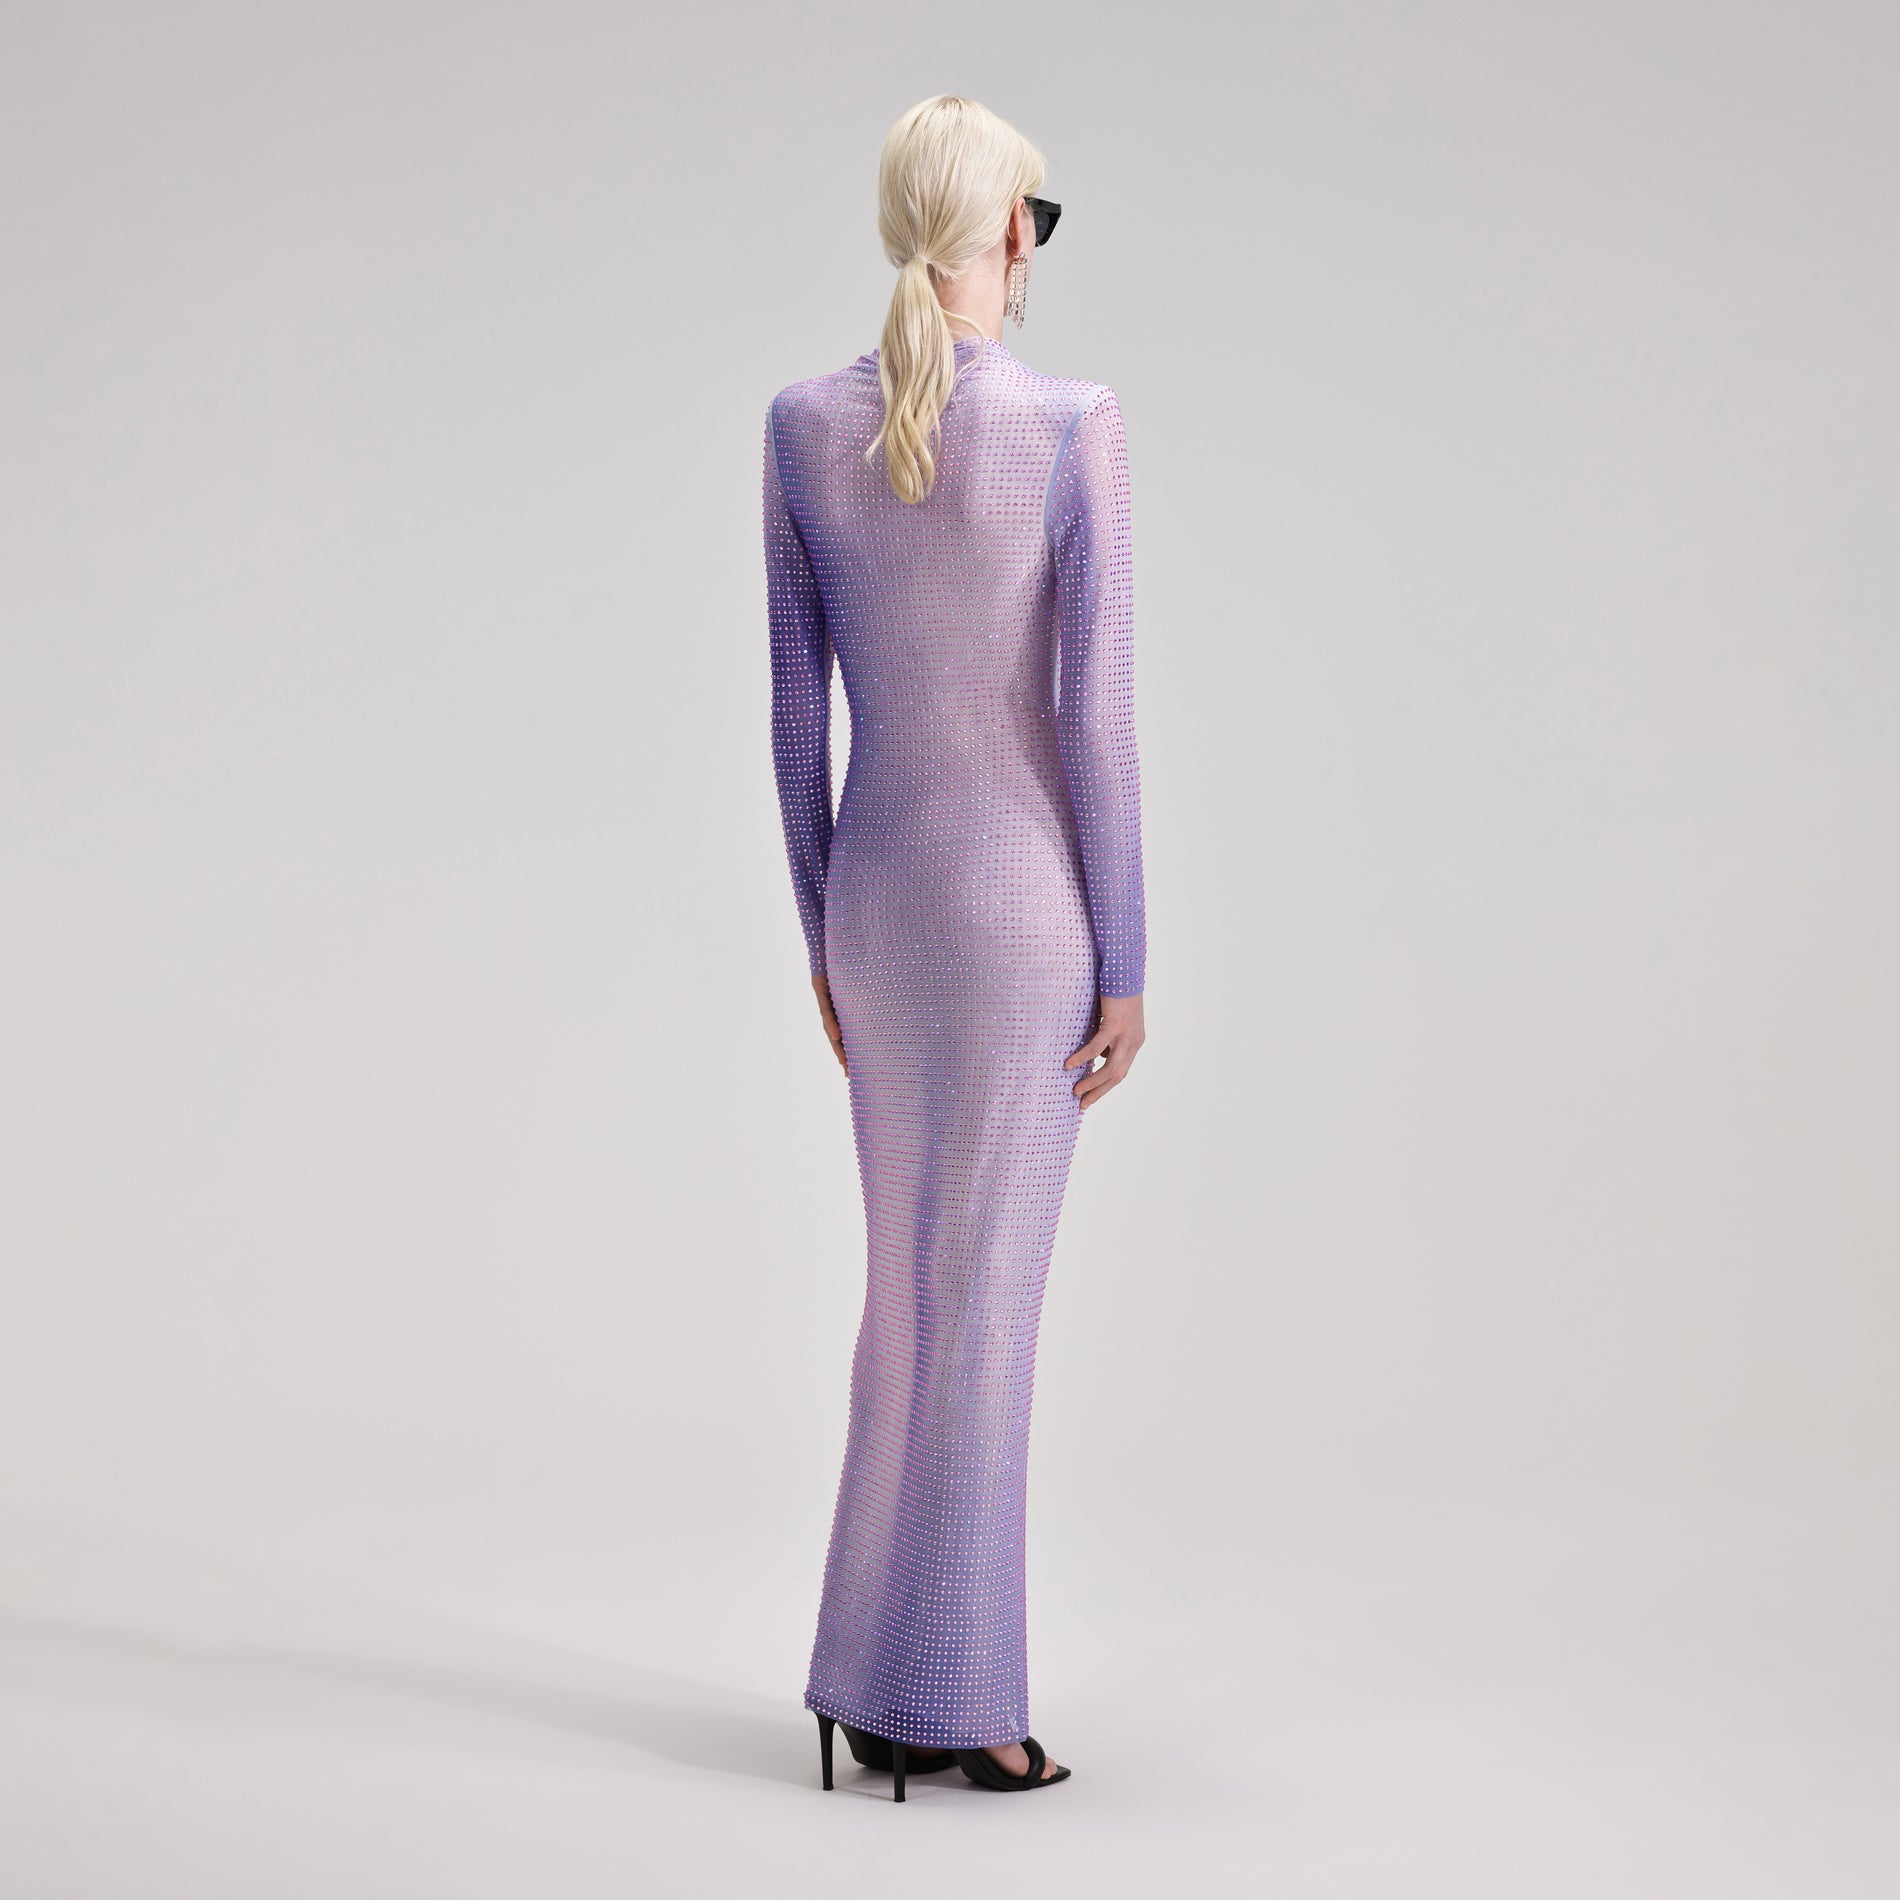 A woman wearing the Lilac Contour Print Maxi Dress